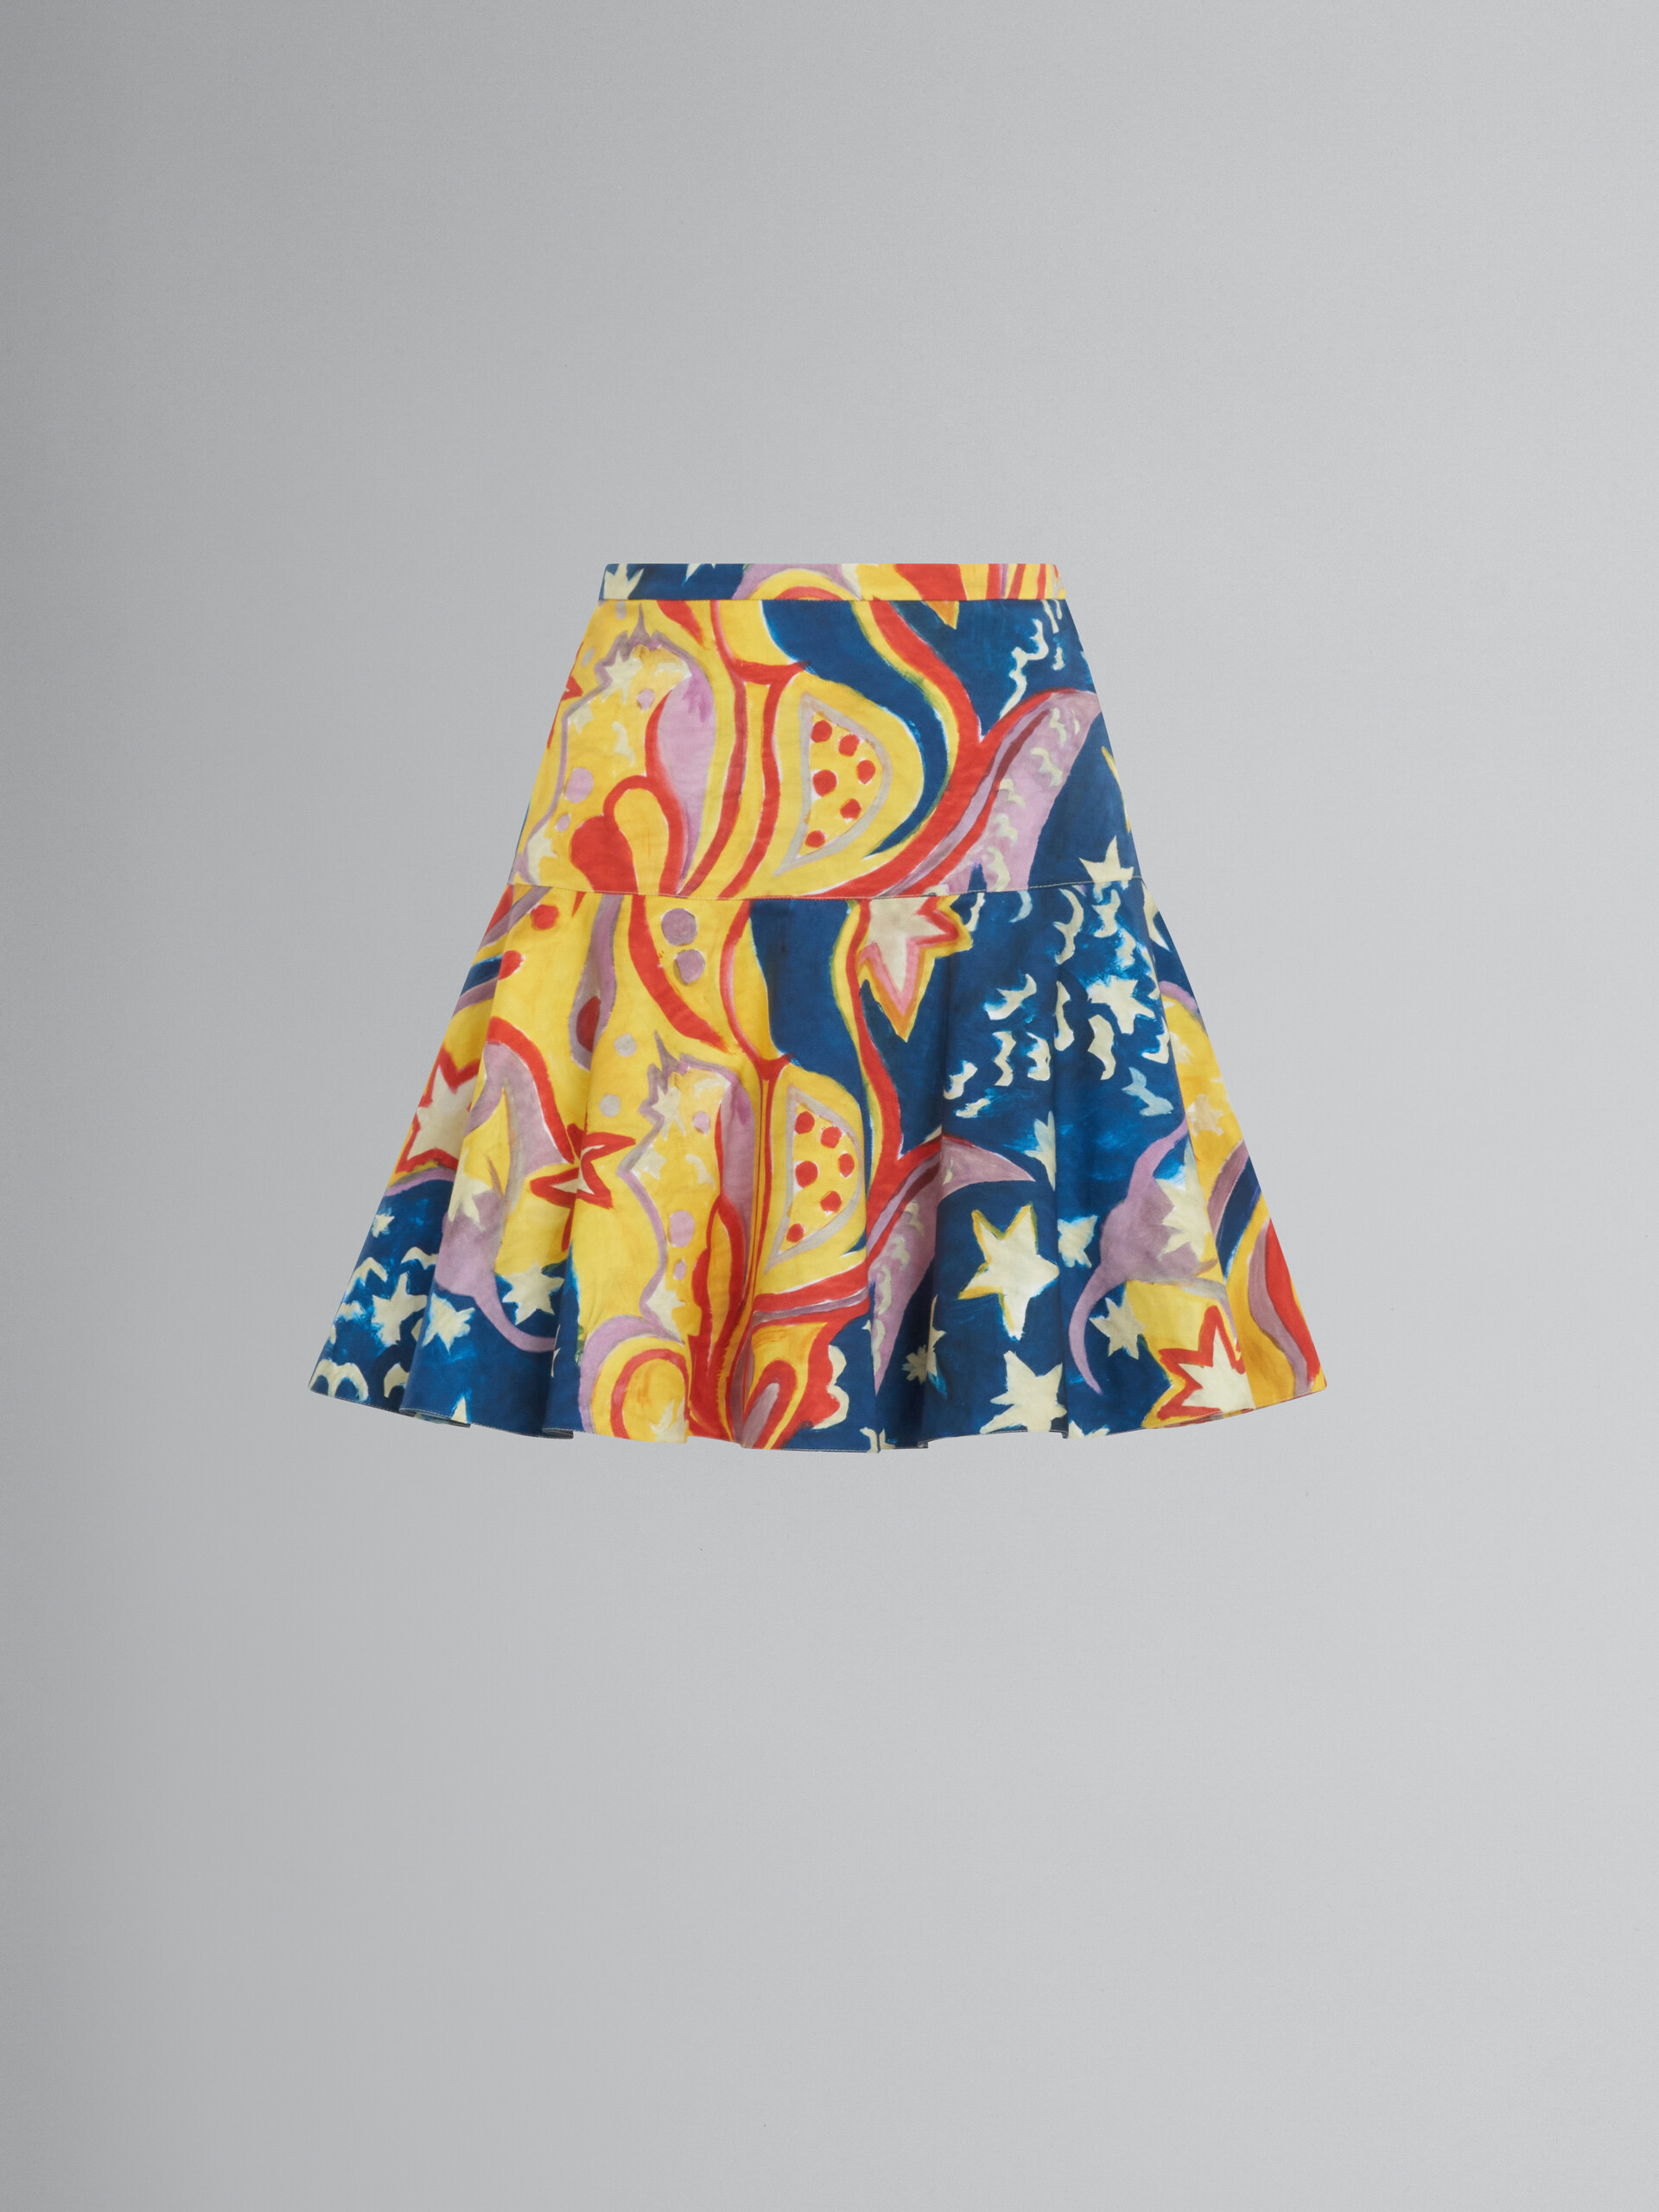 Marni x No Vacancy Inn - Cotton flounce skirt with Galactic Paradise print - Skirts - Image 1